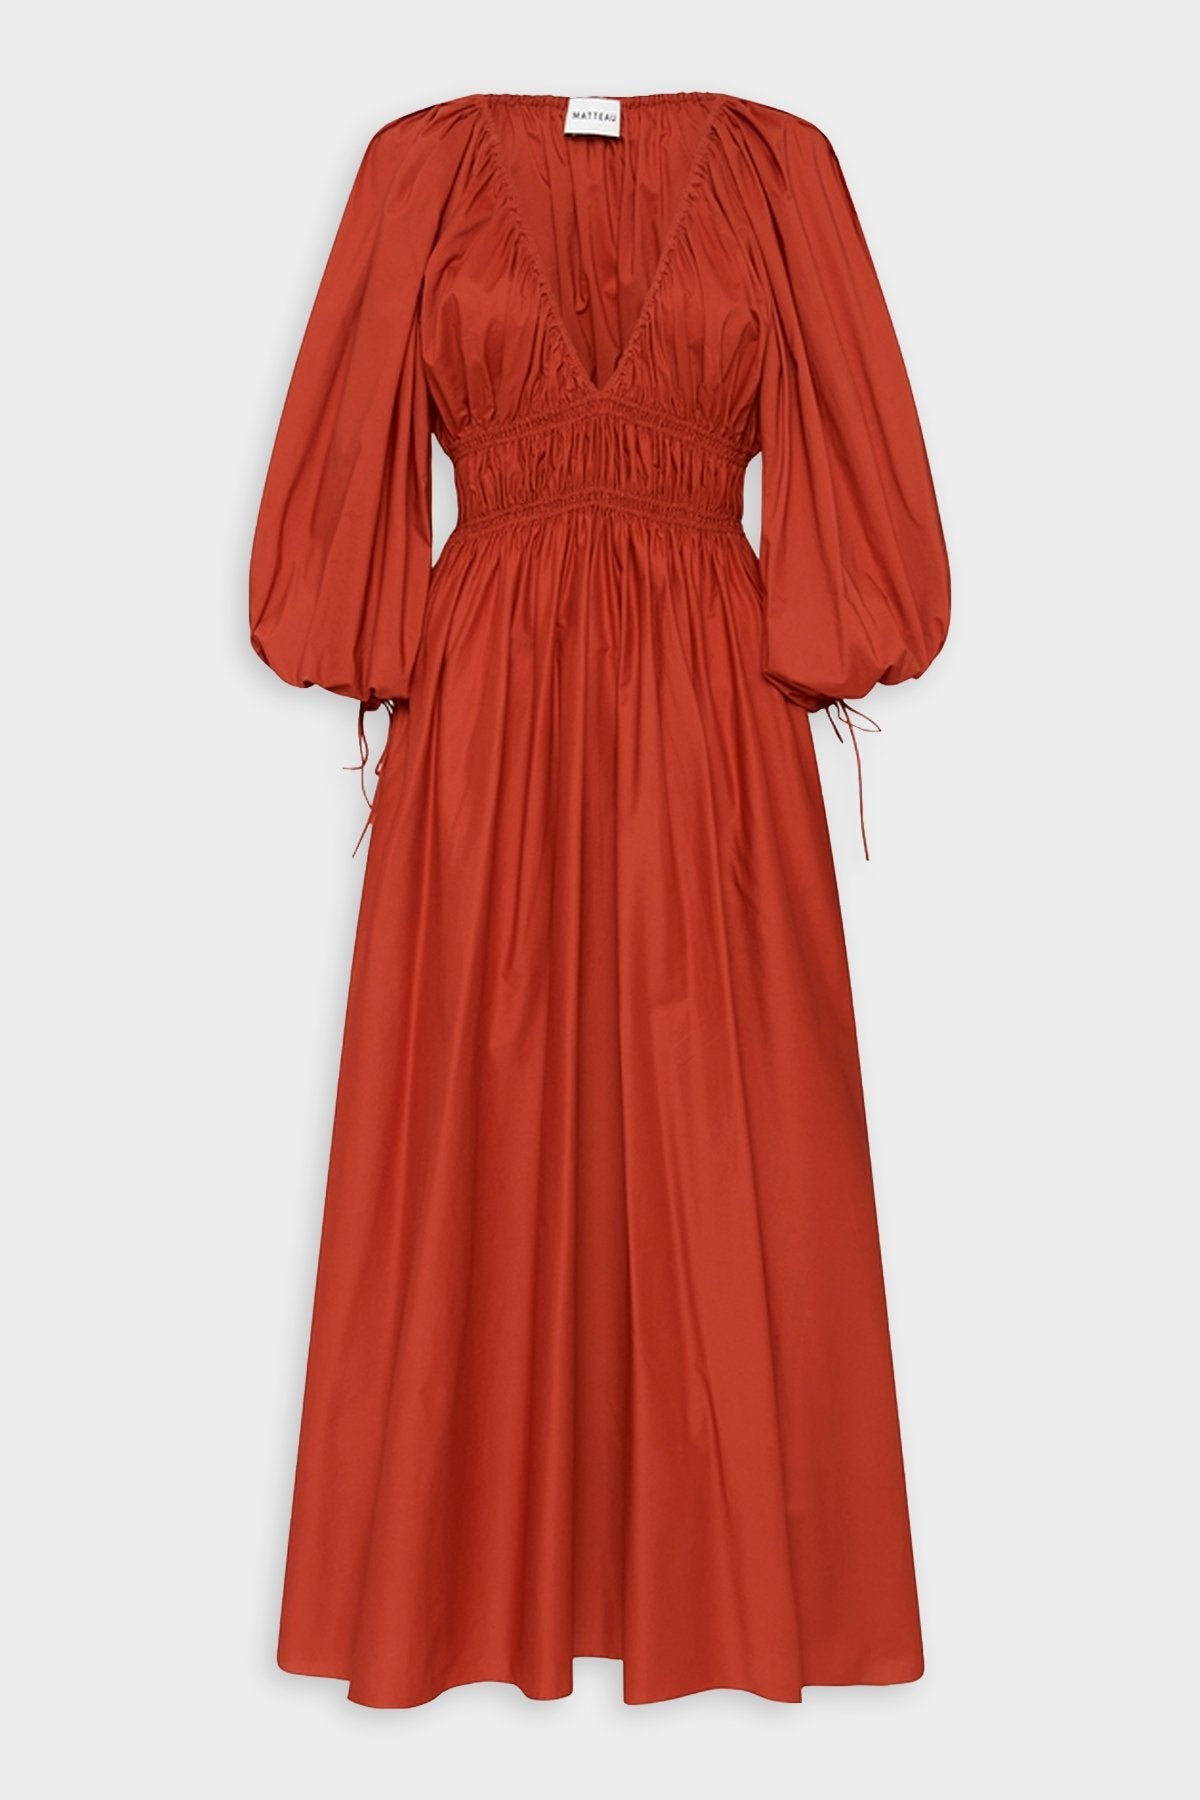 Shirred Plunge Dress in Terracotta - shop-olivia.com